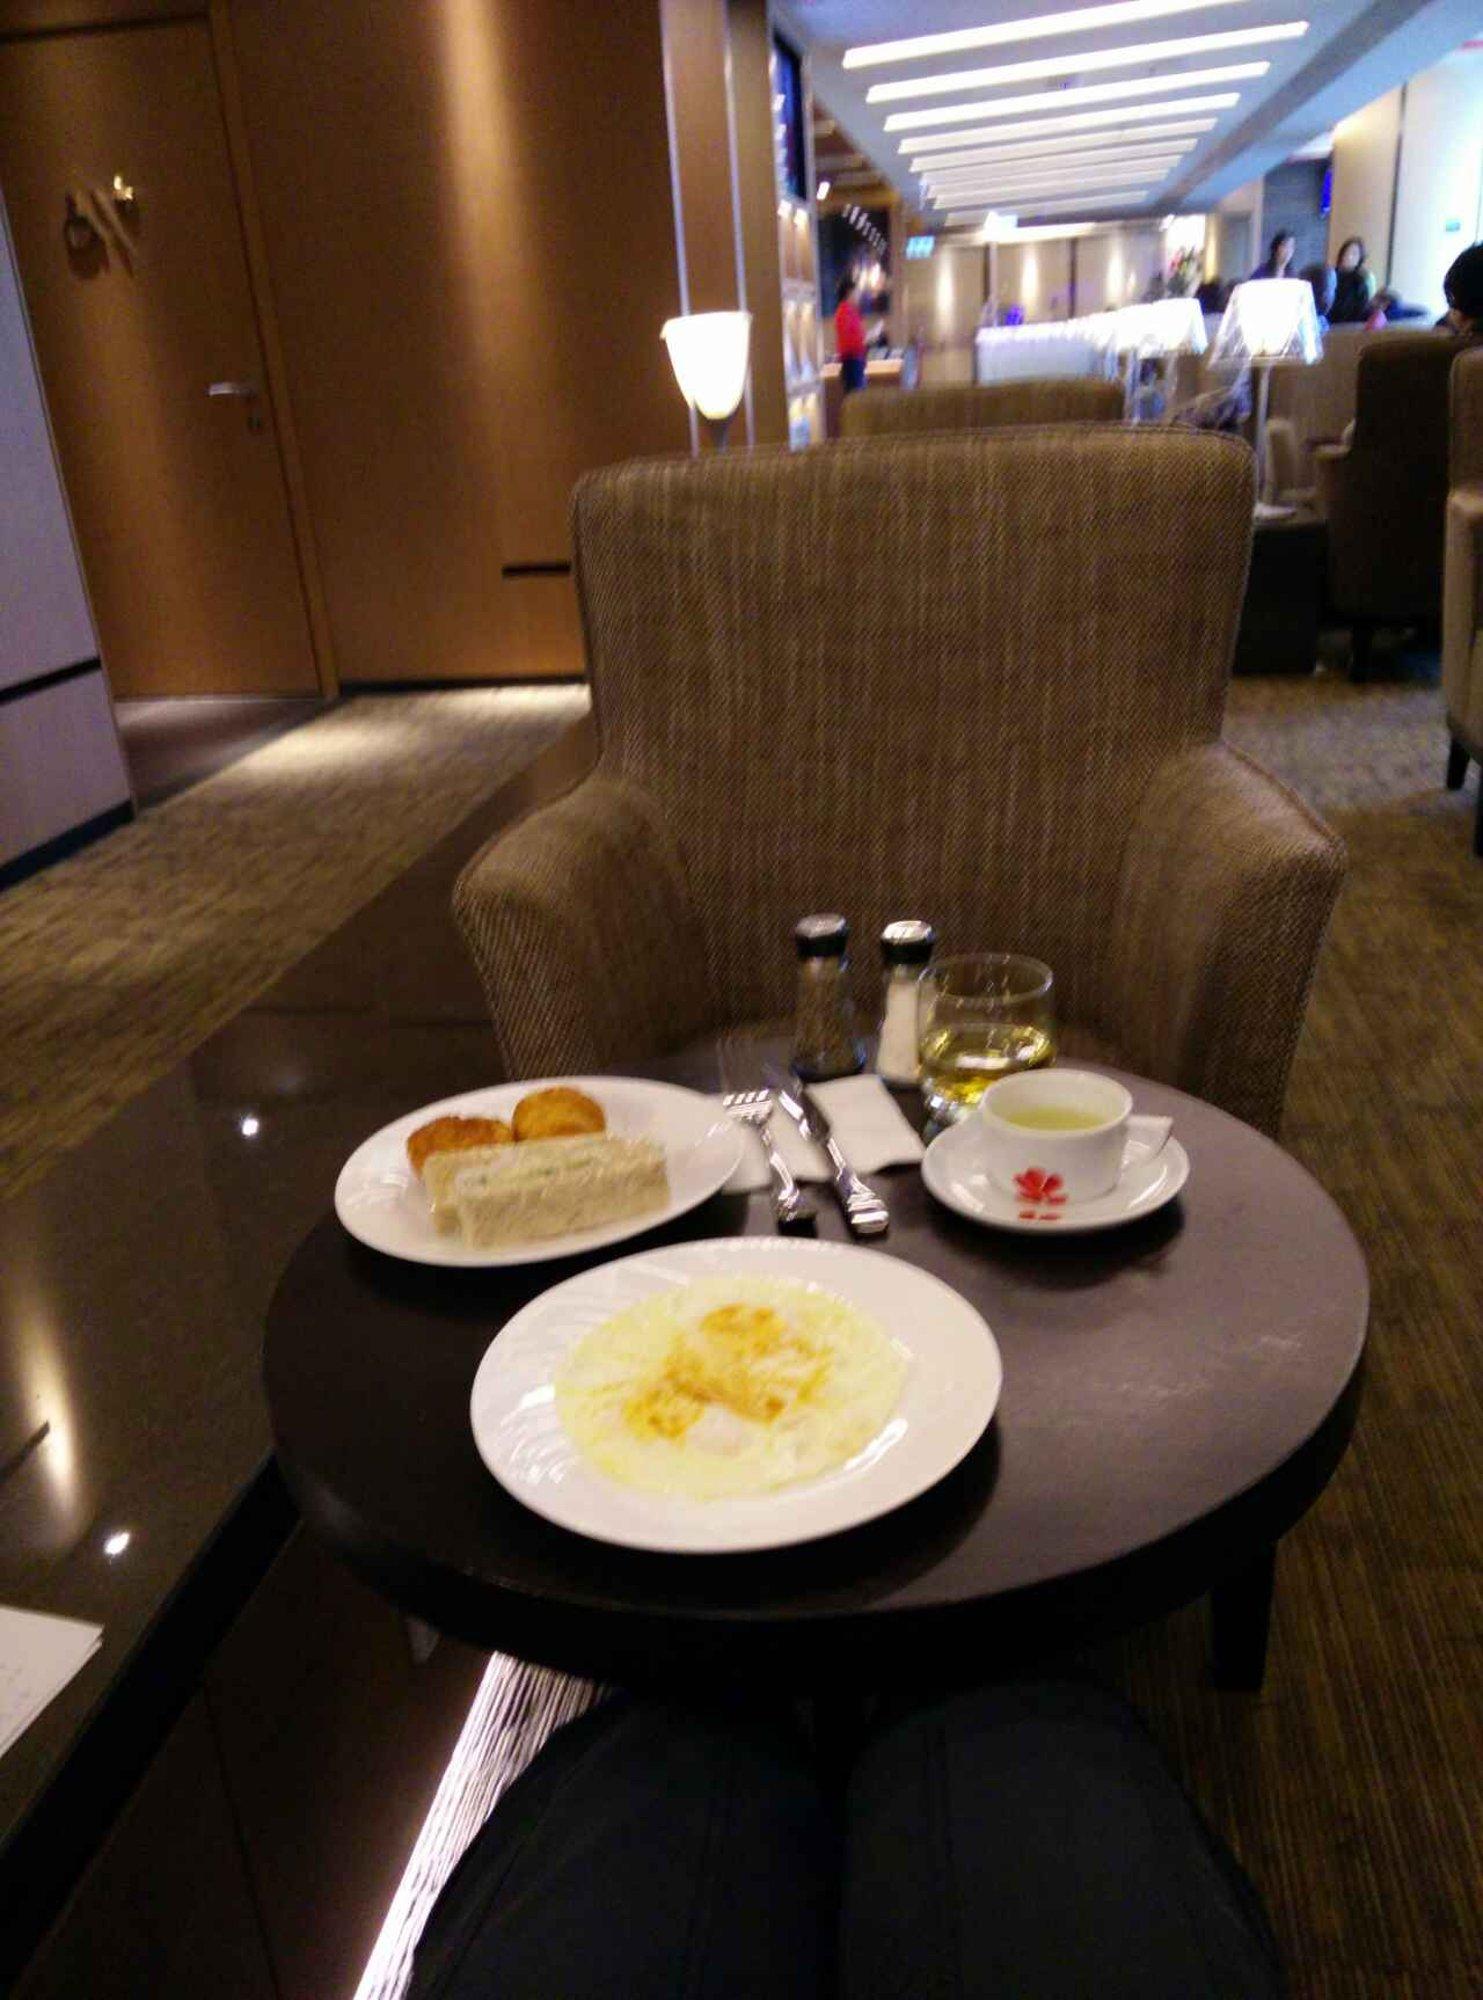 Hong Kong Airlines VIP Lounge (Club Bauhinia) image 31 of 40